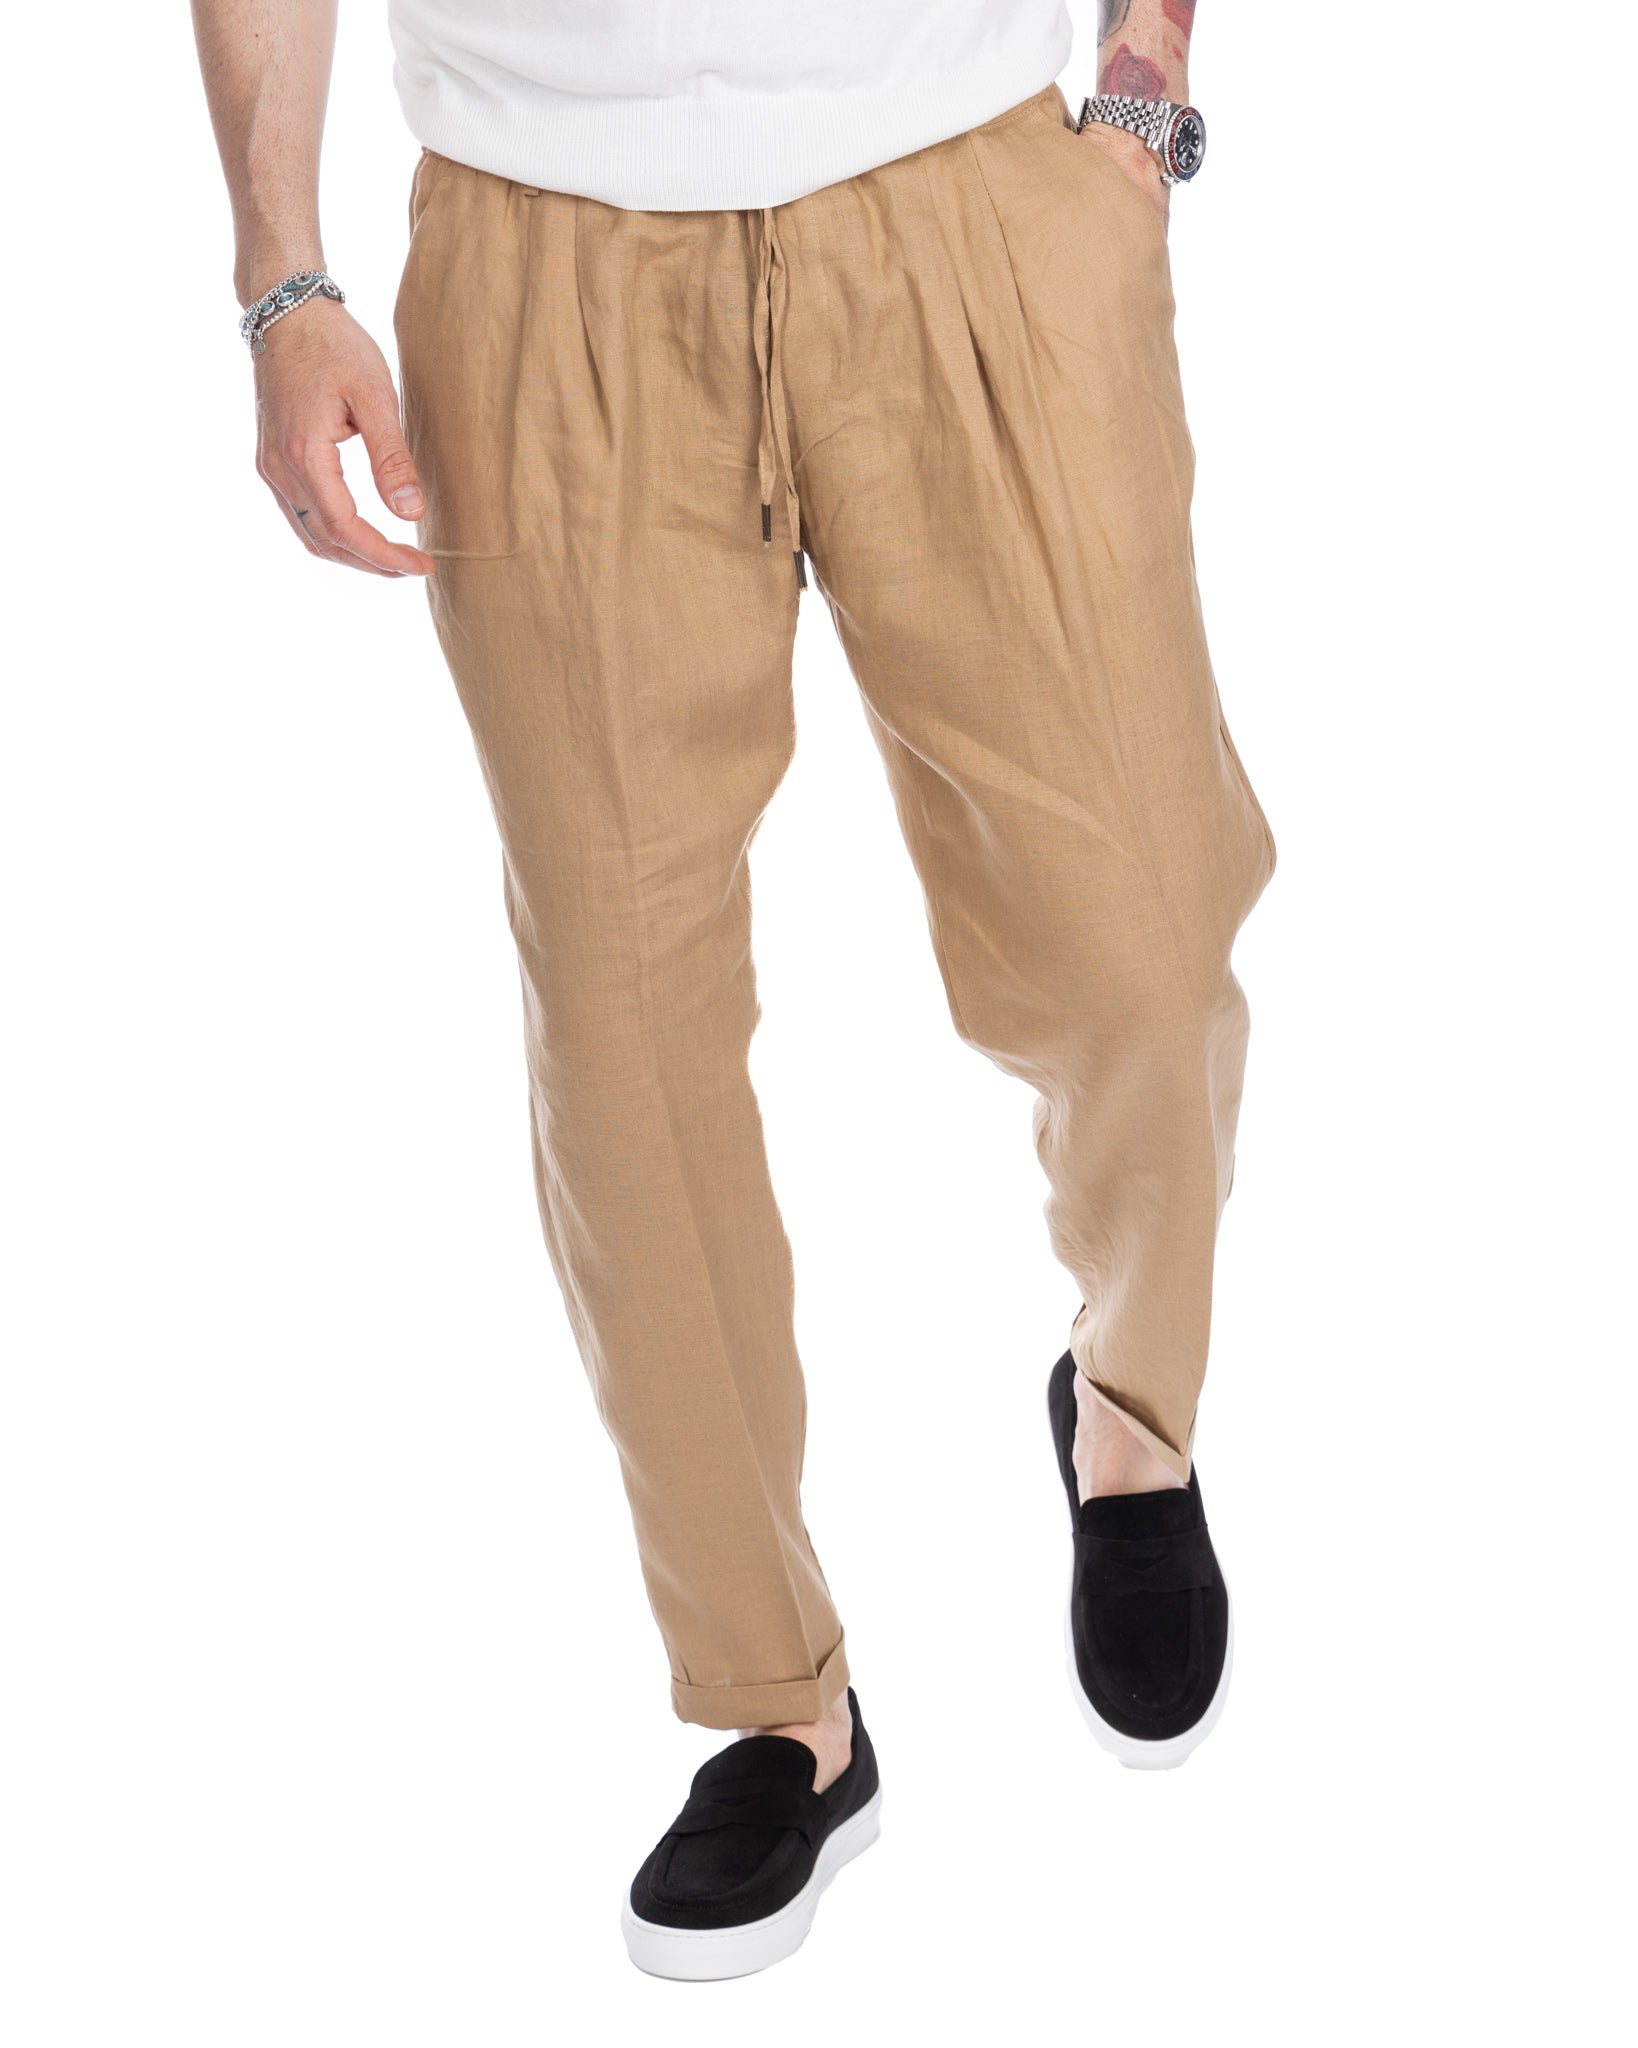 Colin - camel pure linen trousers